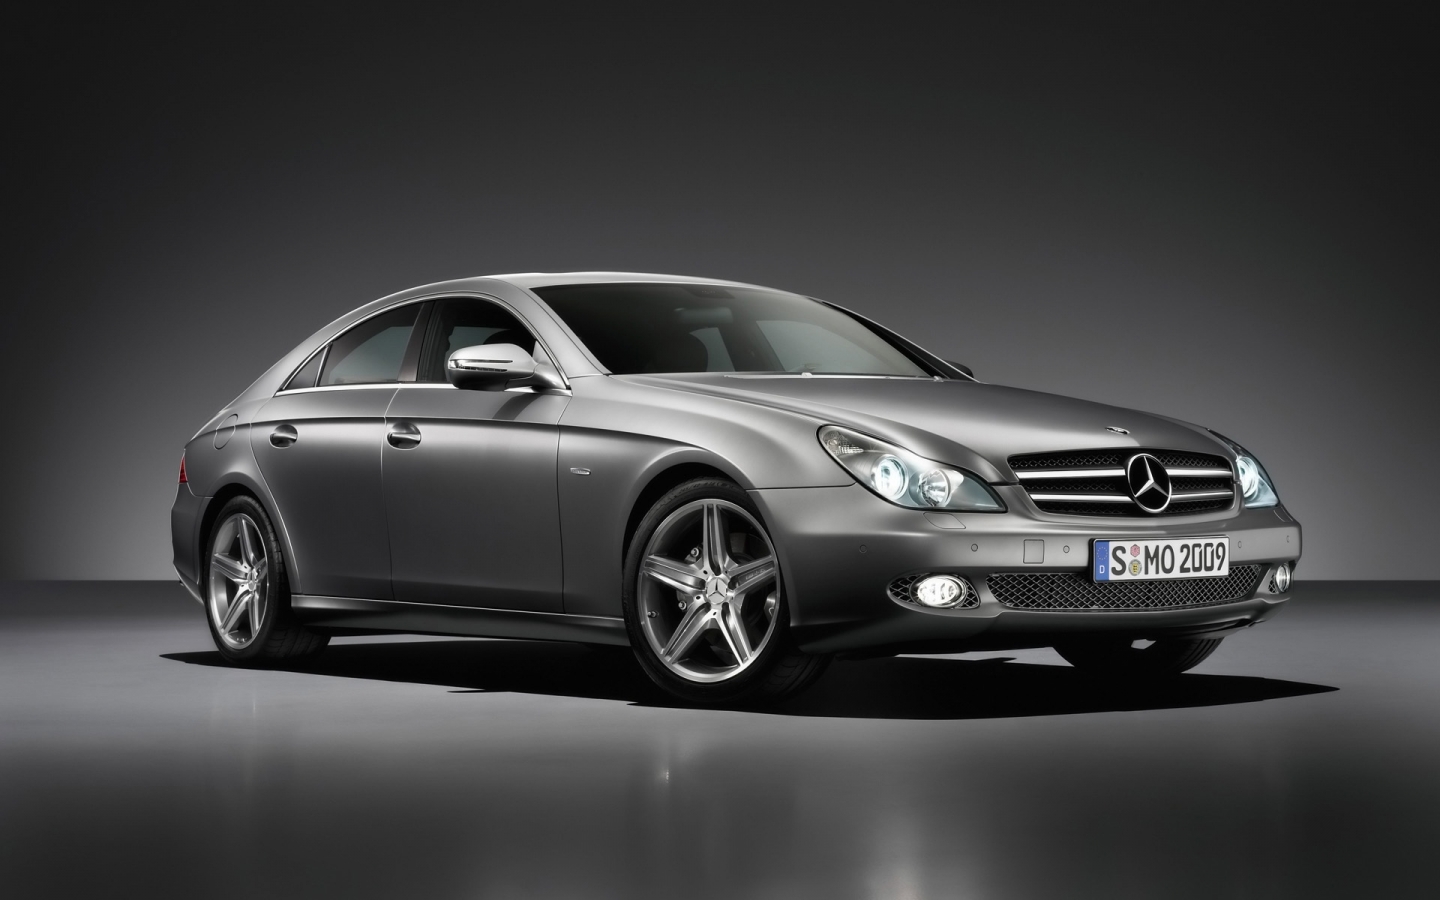 Mercedes Benz CLS 2009 for 1440 x 900 widescreen resolution